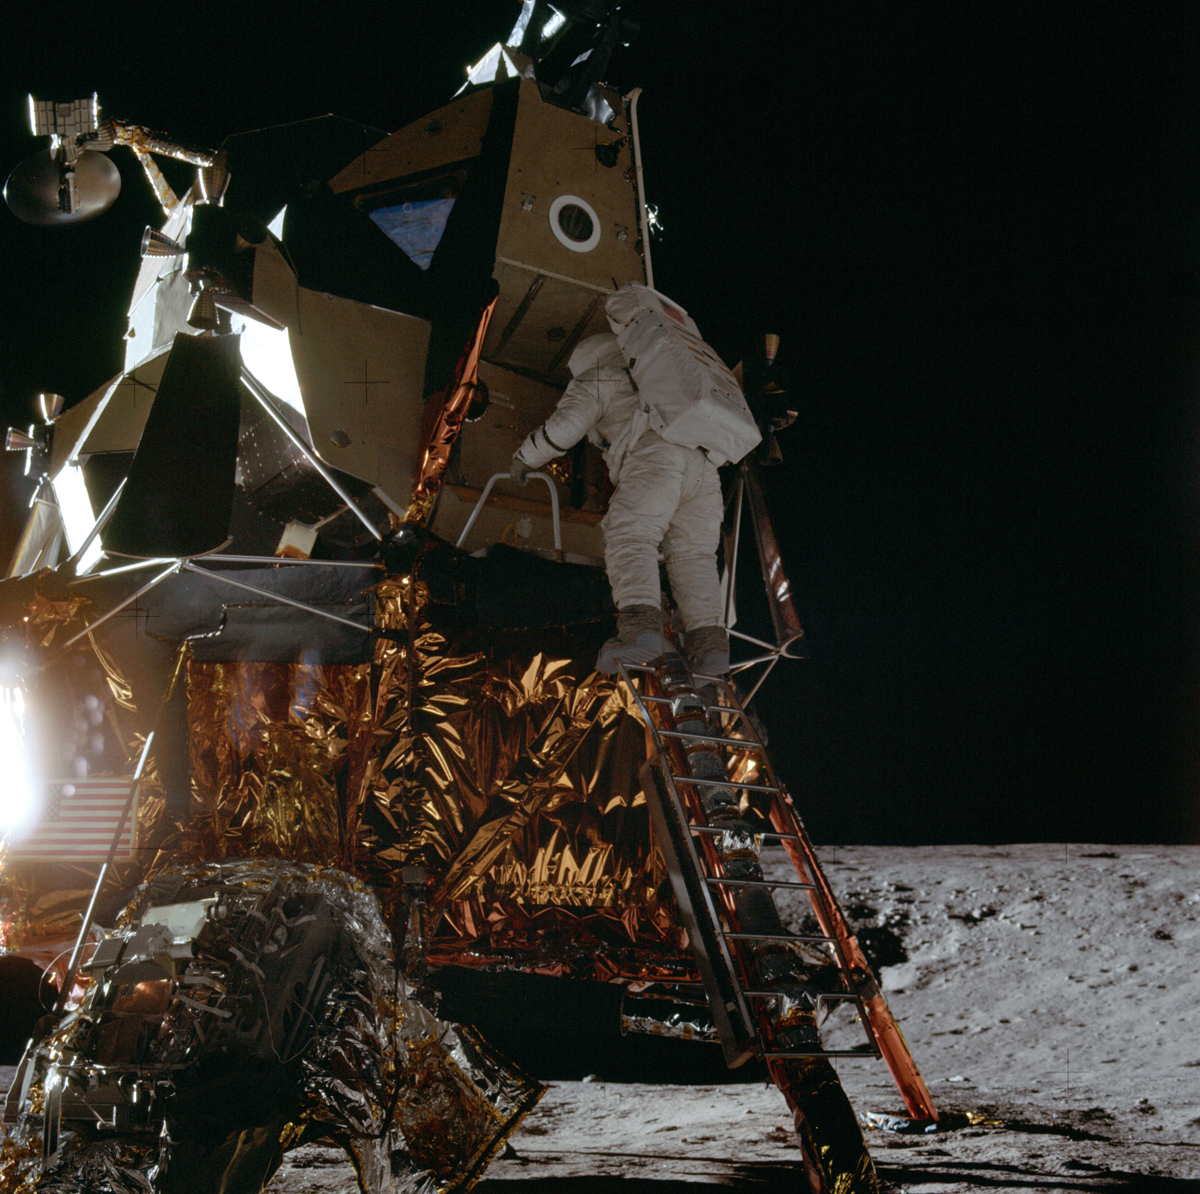 Astronaut climbing down ladder from lunar module on the moon